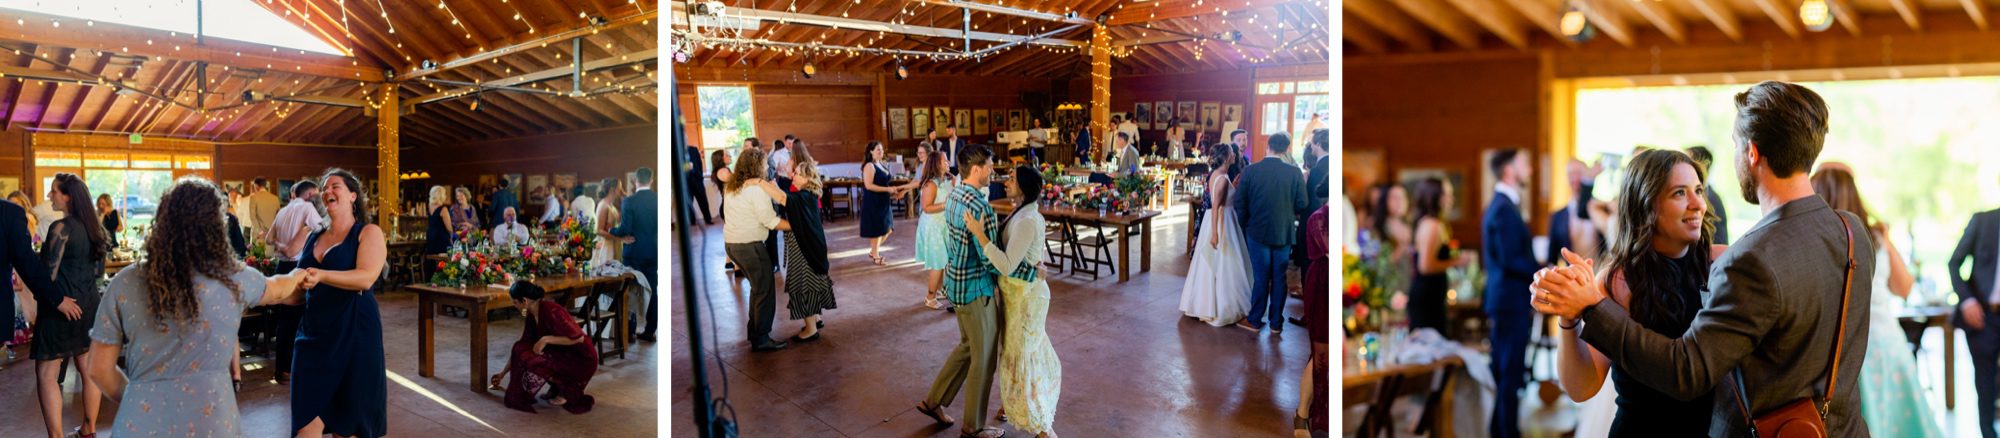 Planet Bluegrass Wedding venue in Lyons Colorado: Colorado Wedding Photographer, Wedding reception